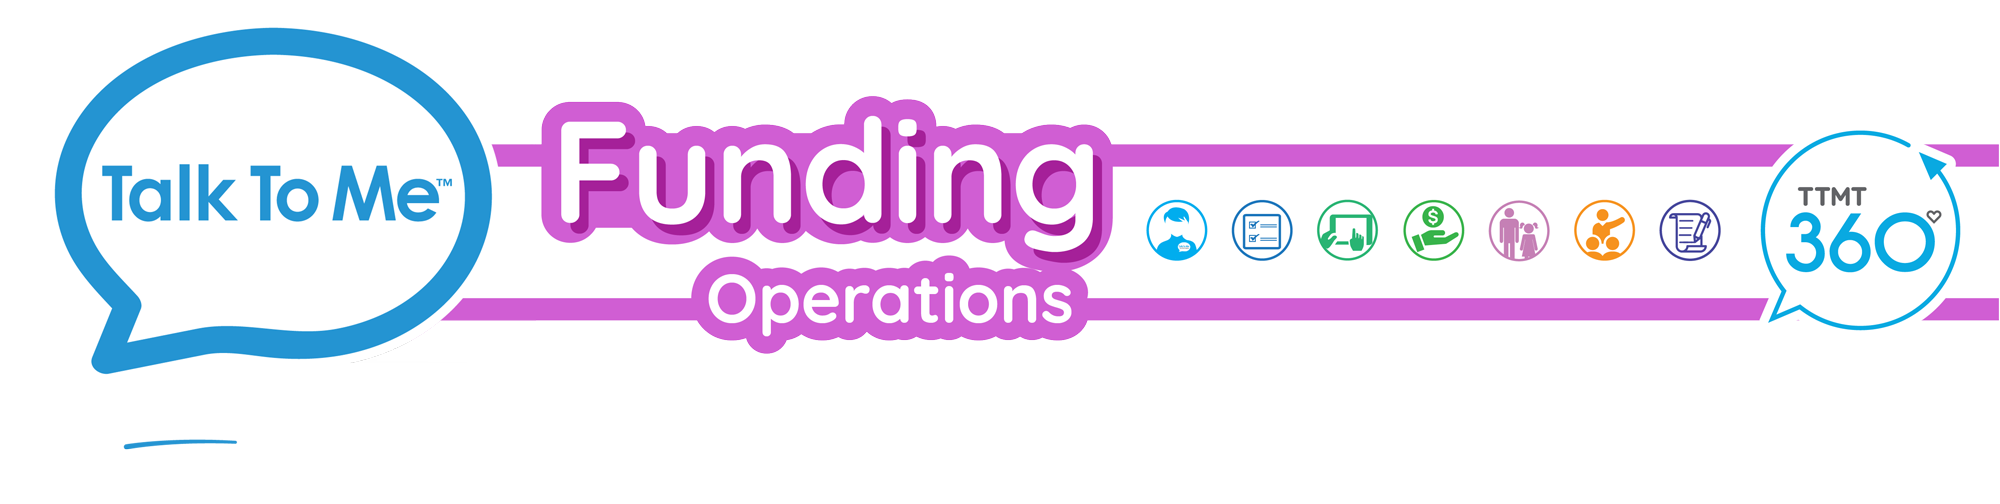 funding operations header